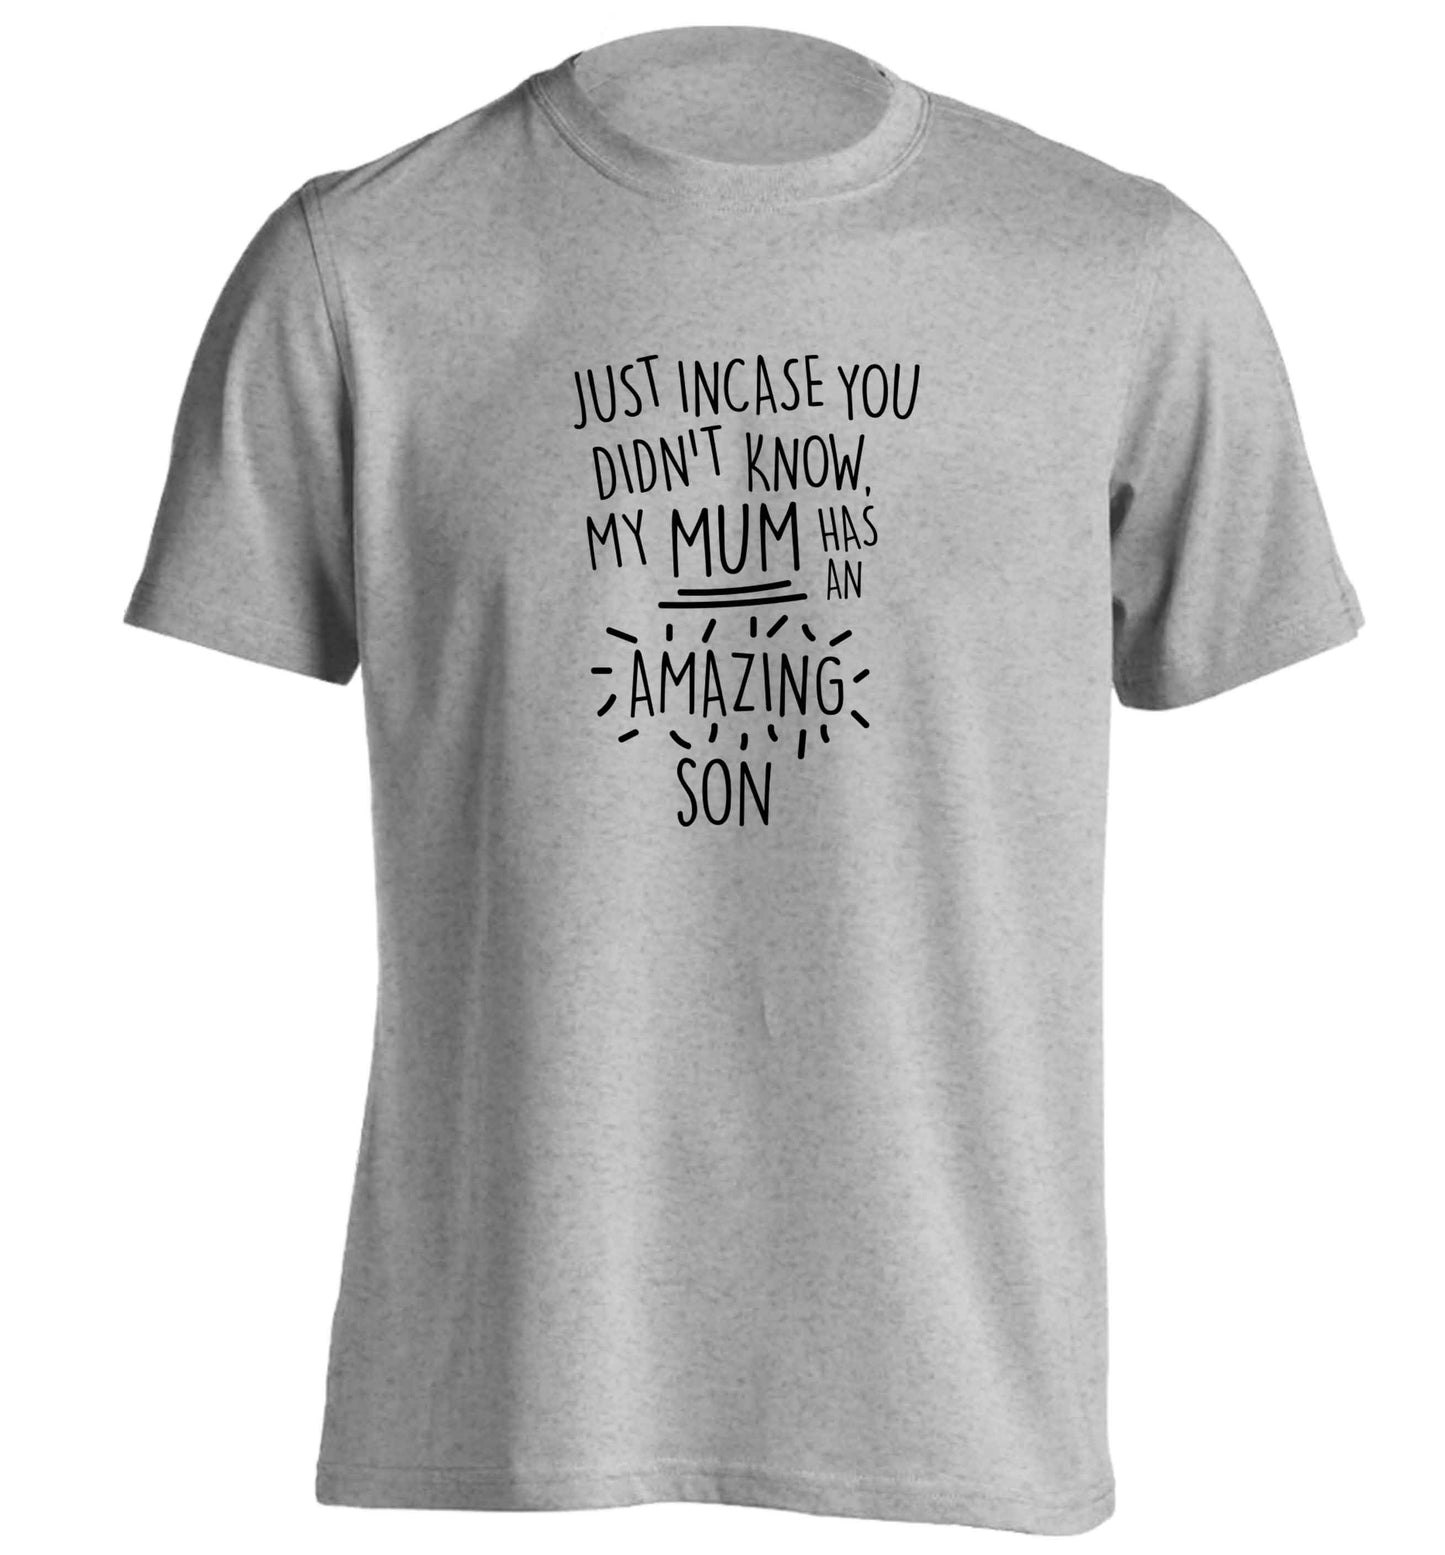 Just incase you didn't know my mum has an amazing son adults unisex grey Tshirt 2XL